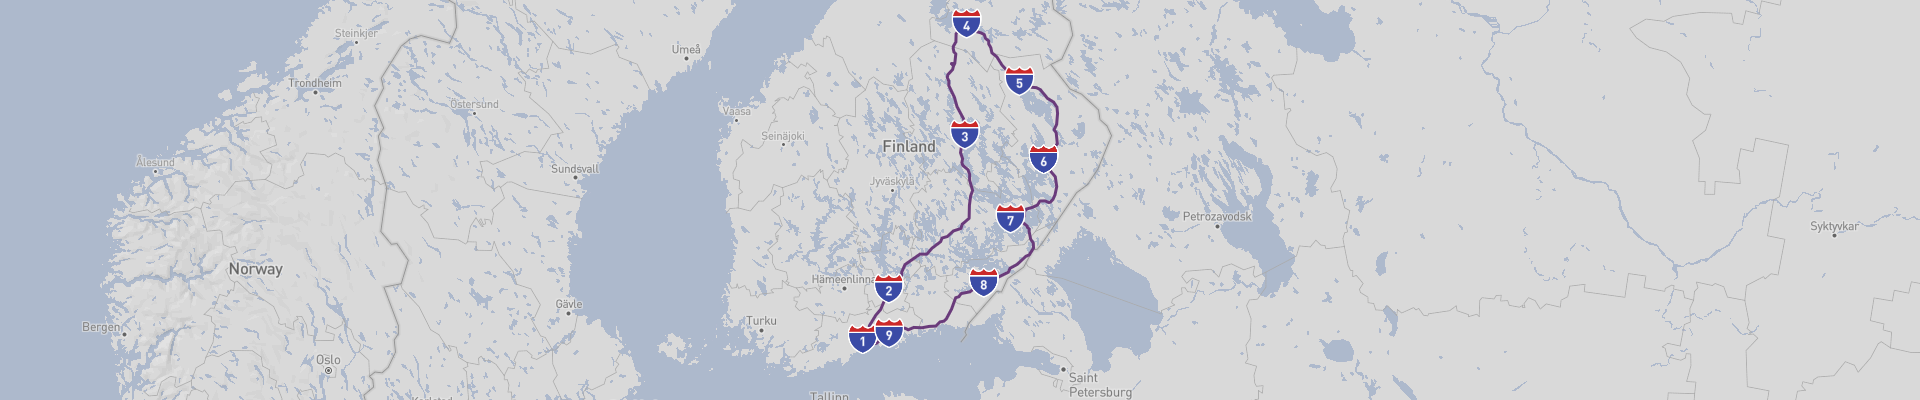 East Finland Road Trip